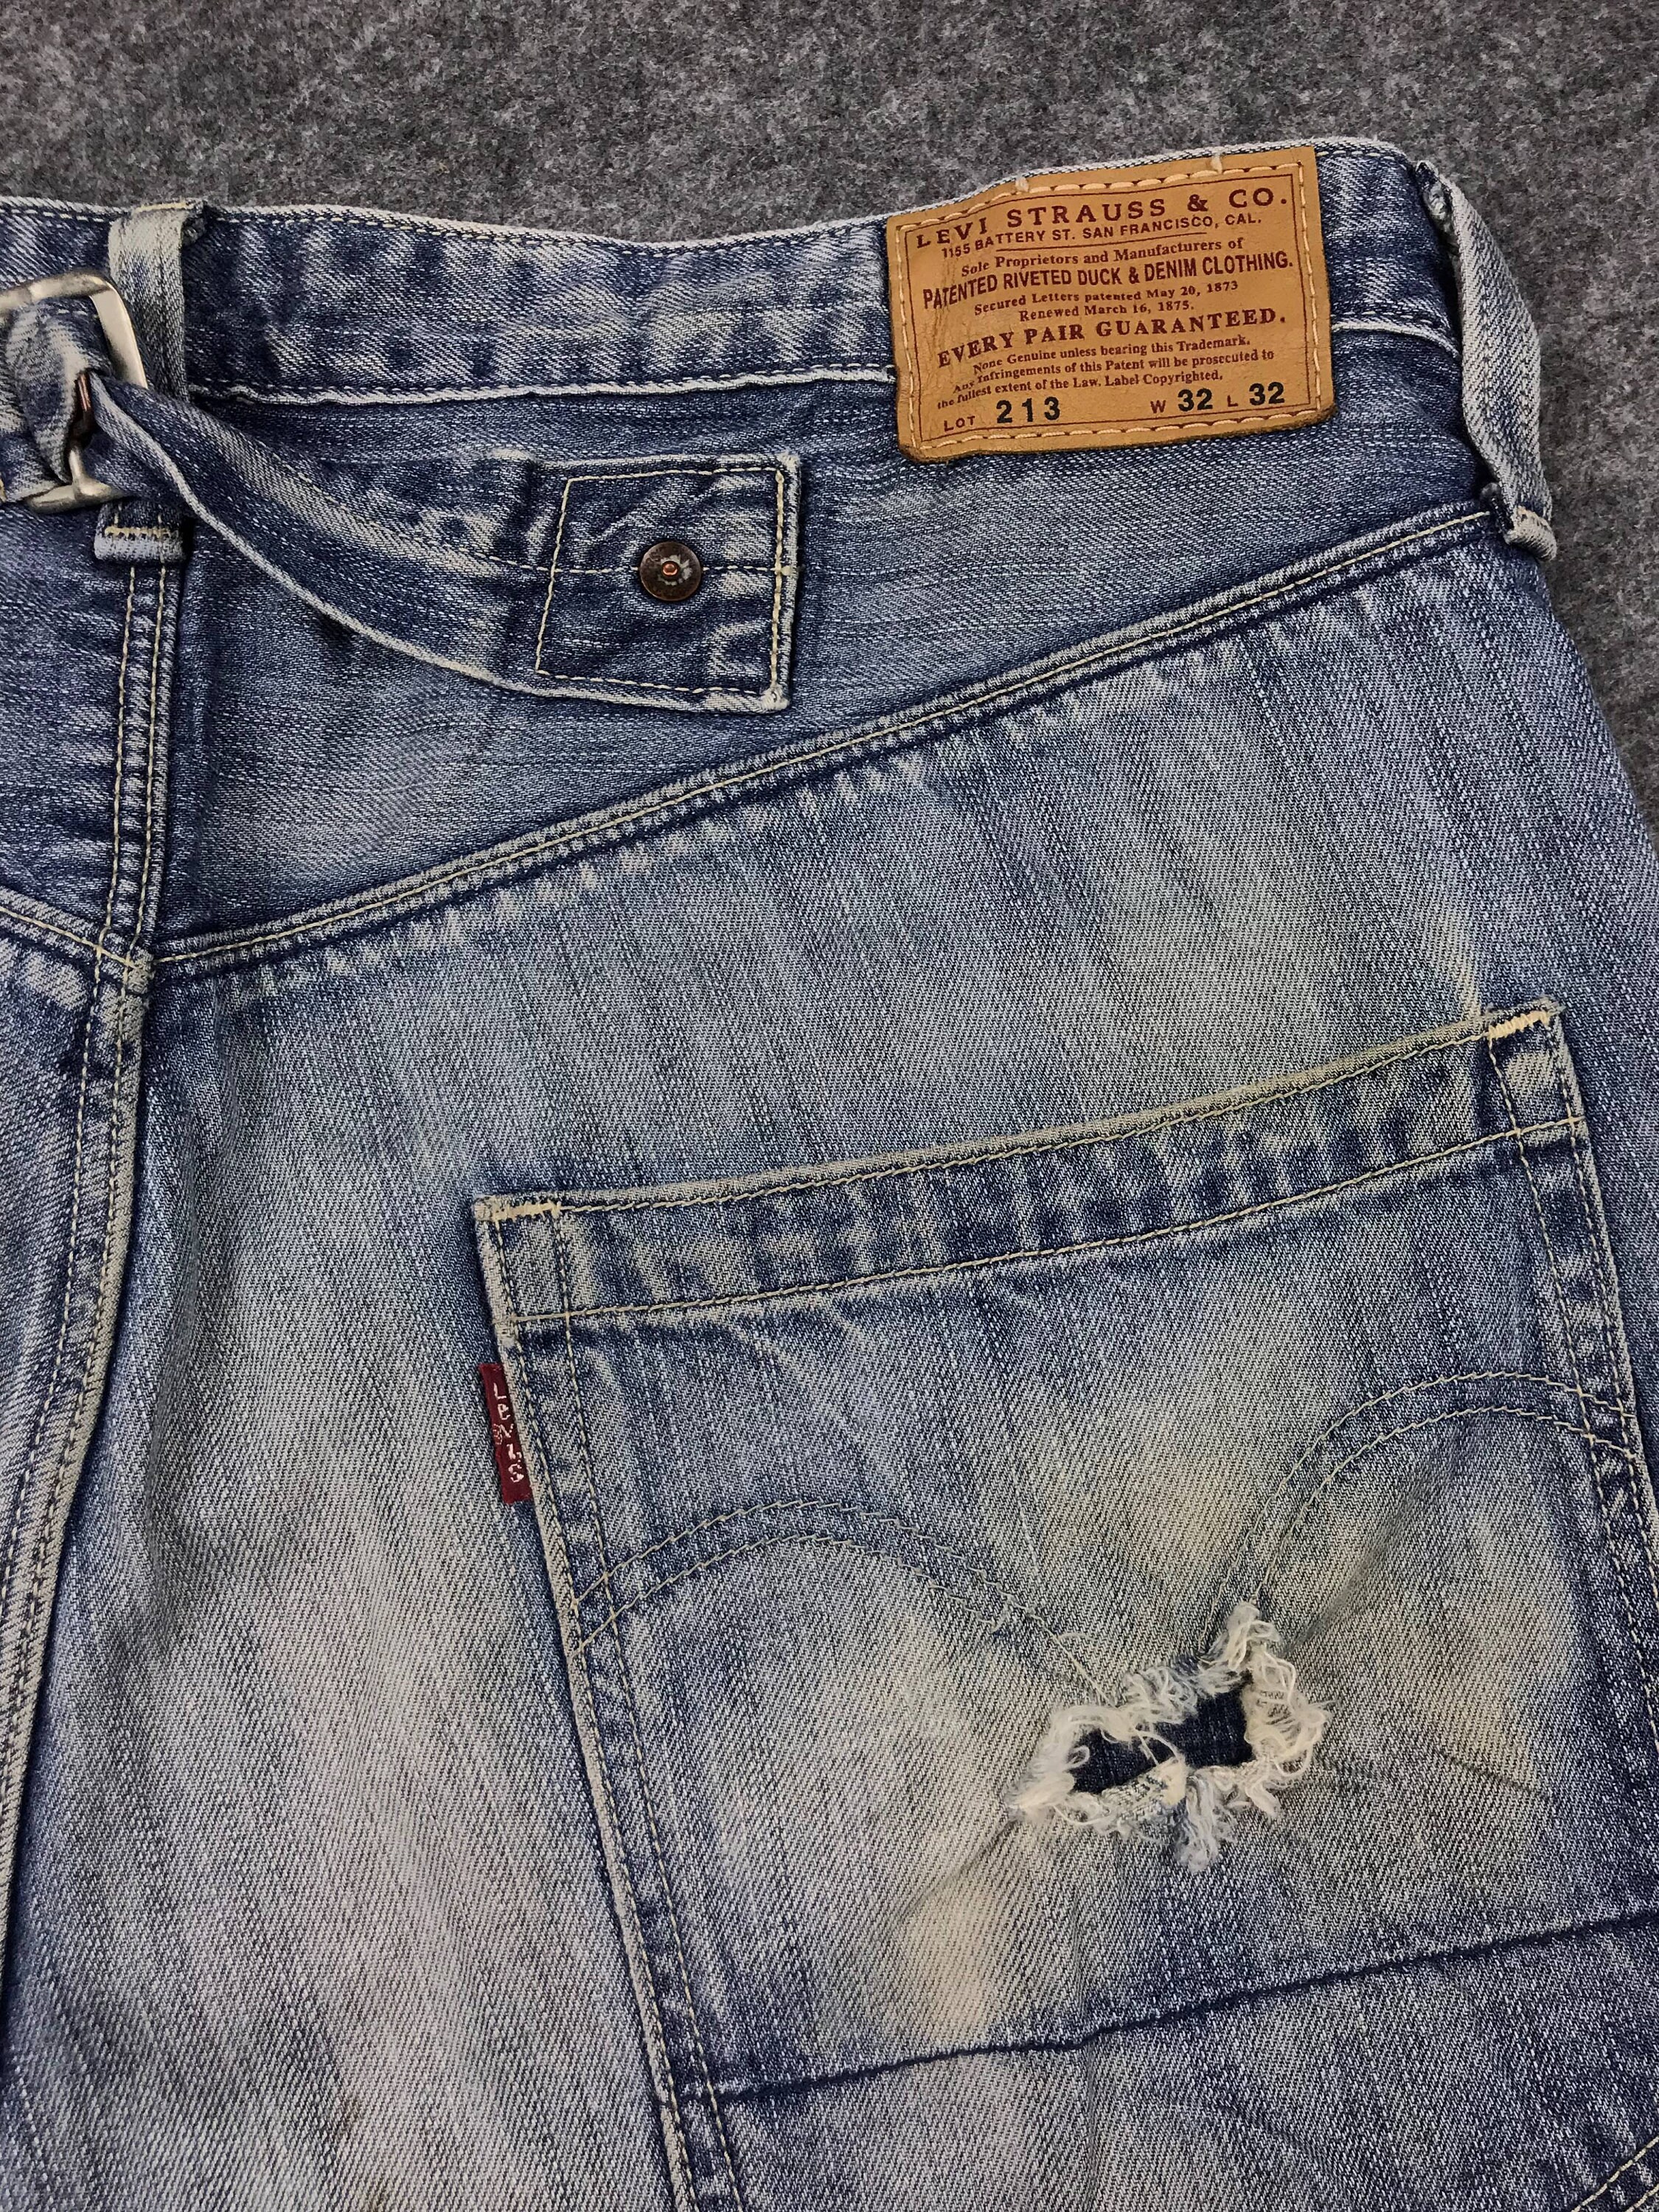 Vintage Levi's 213 Distressed Jeans Light Wash Levi - Etsy